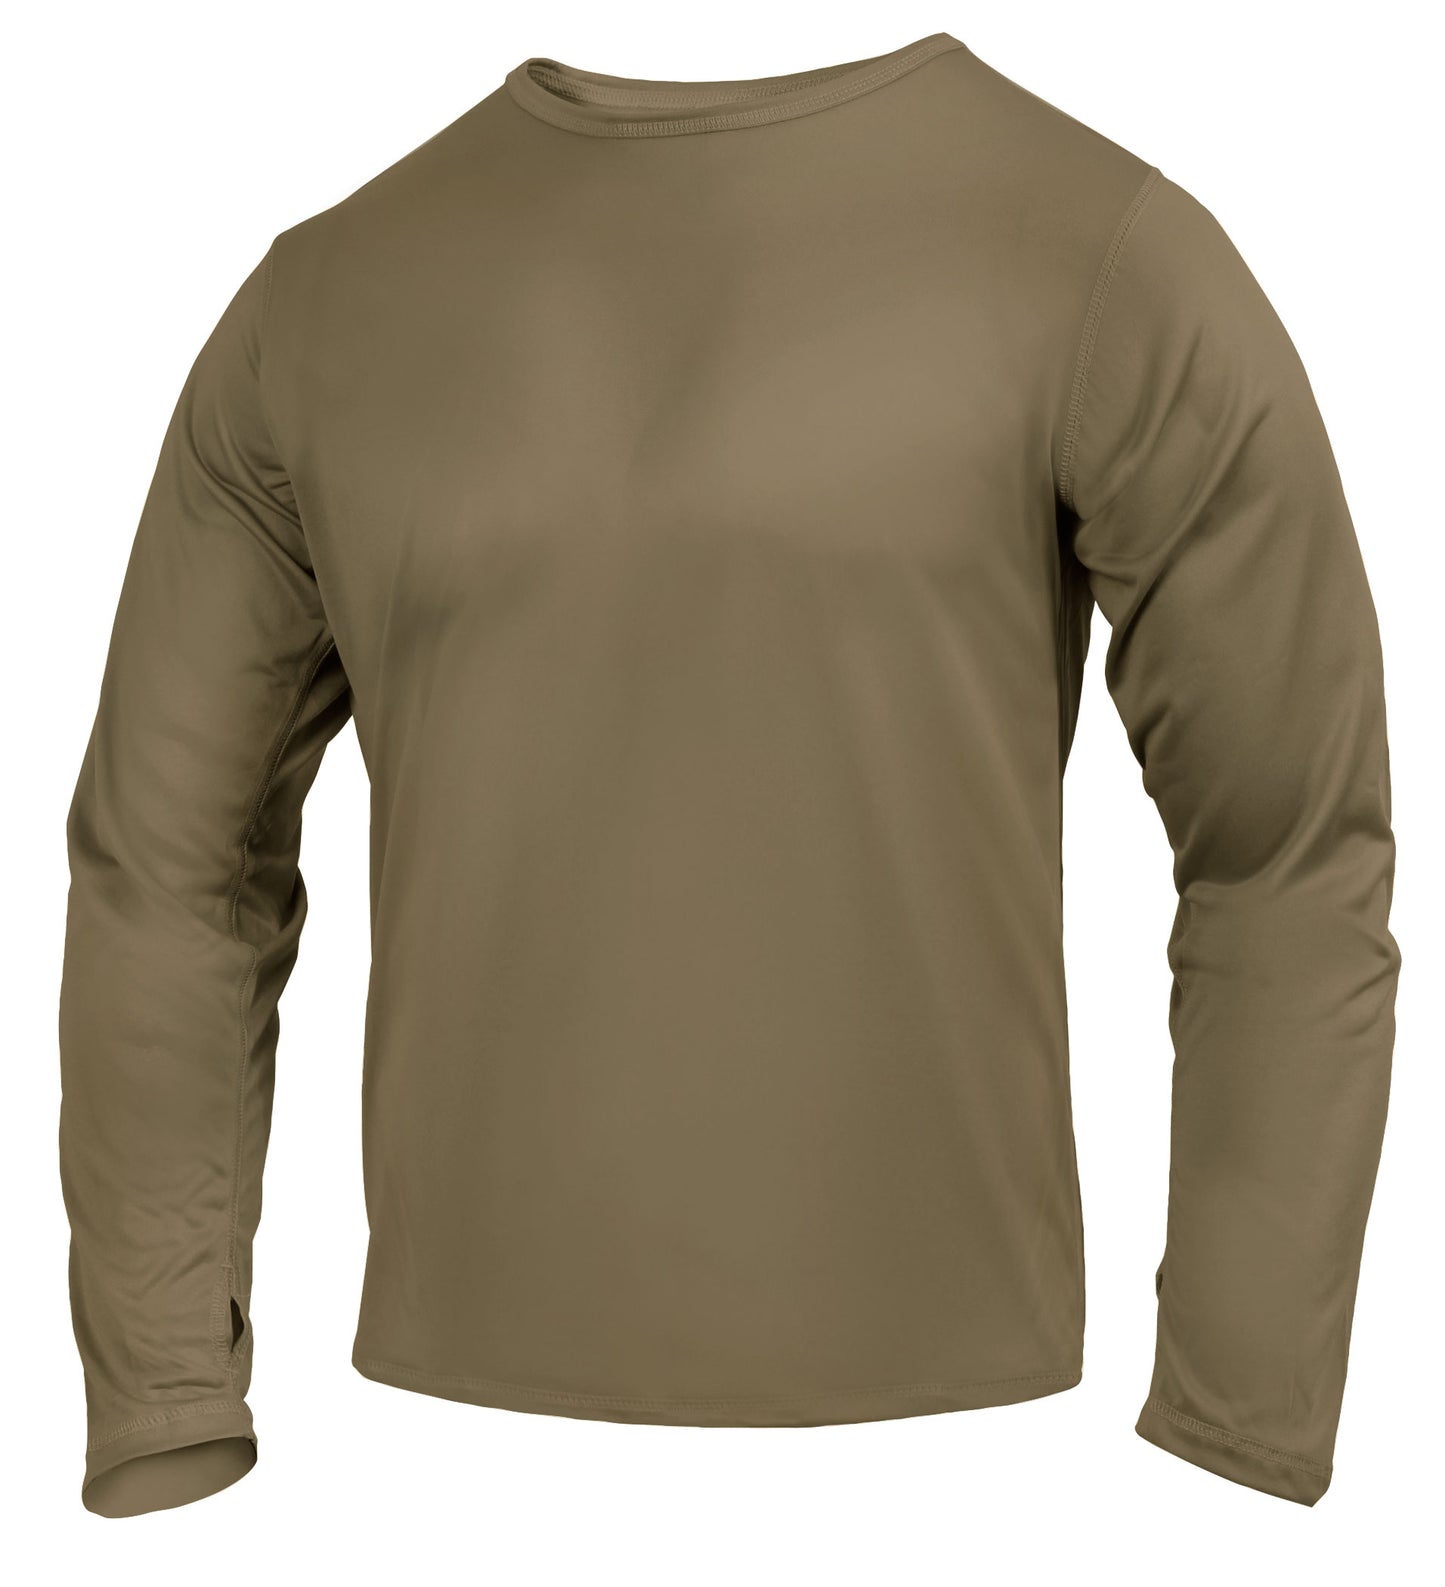 Rothco Gen III Silk Weight Underwear Top - AR 670-1 Coyote Brown